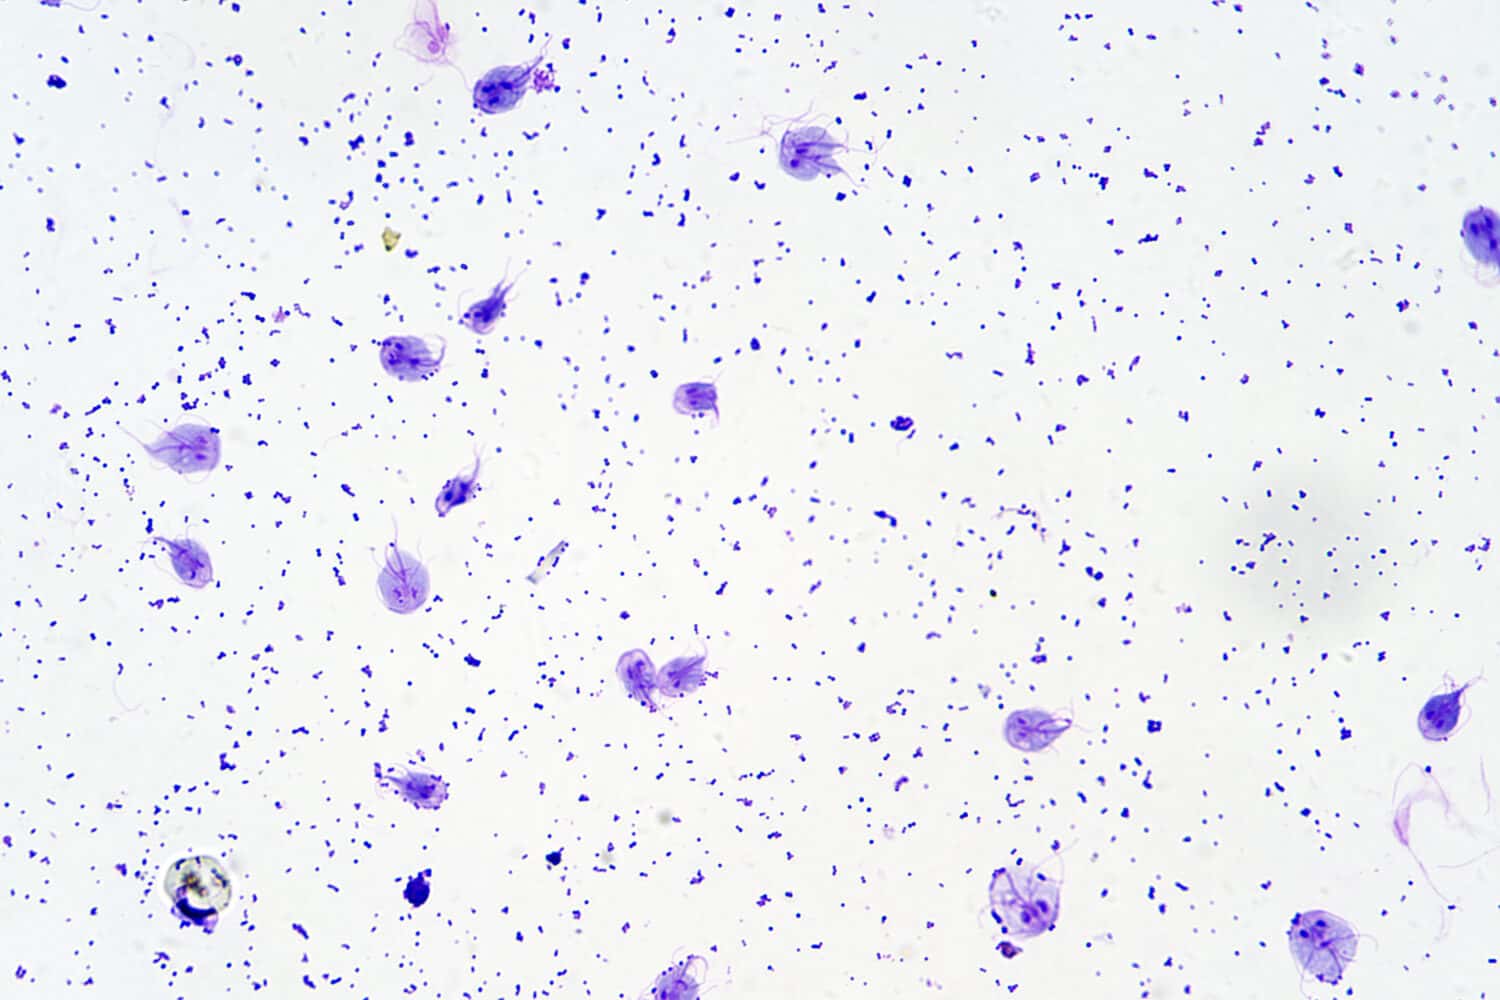 Flagellated protozoan parasite Giardia intestinalis under the microscope